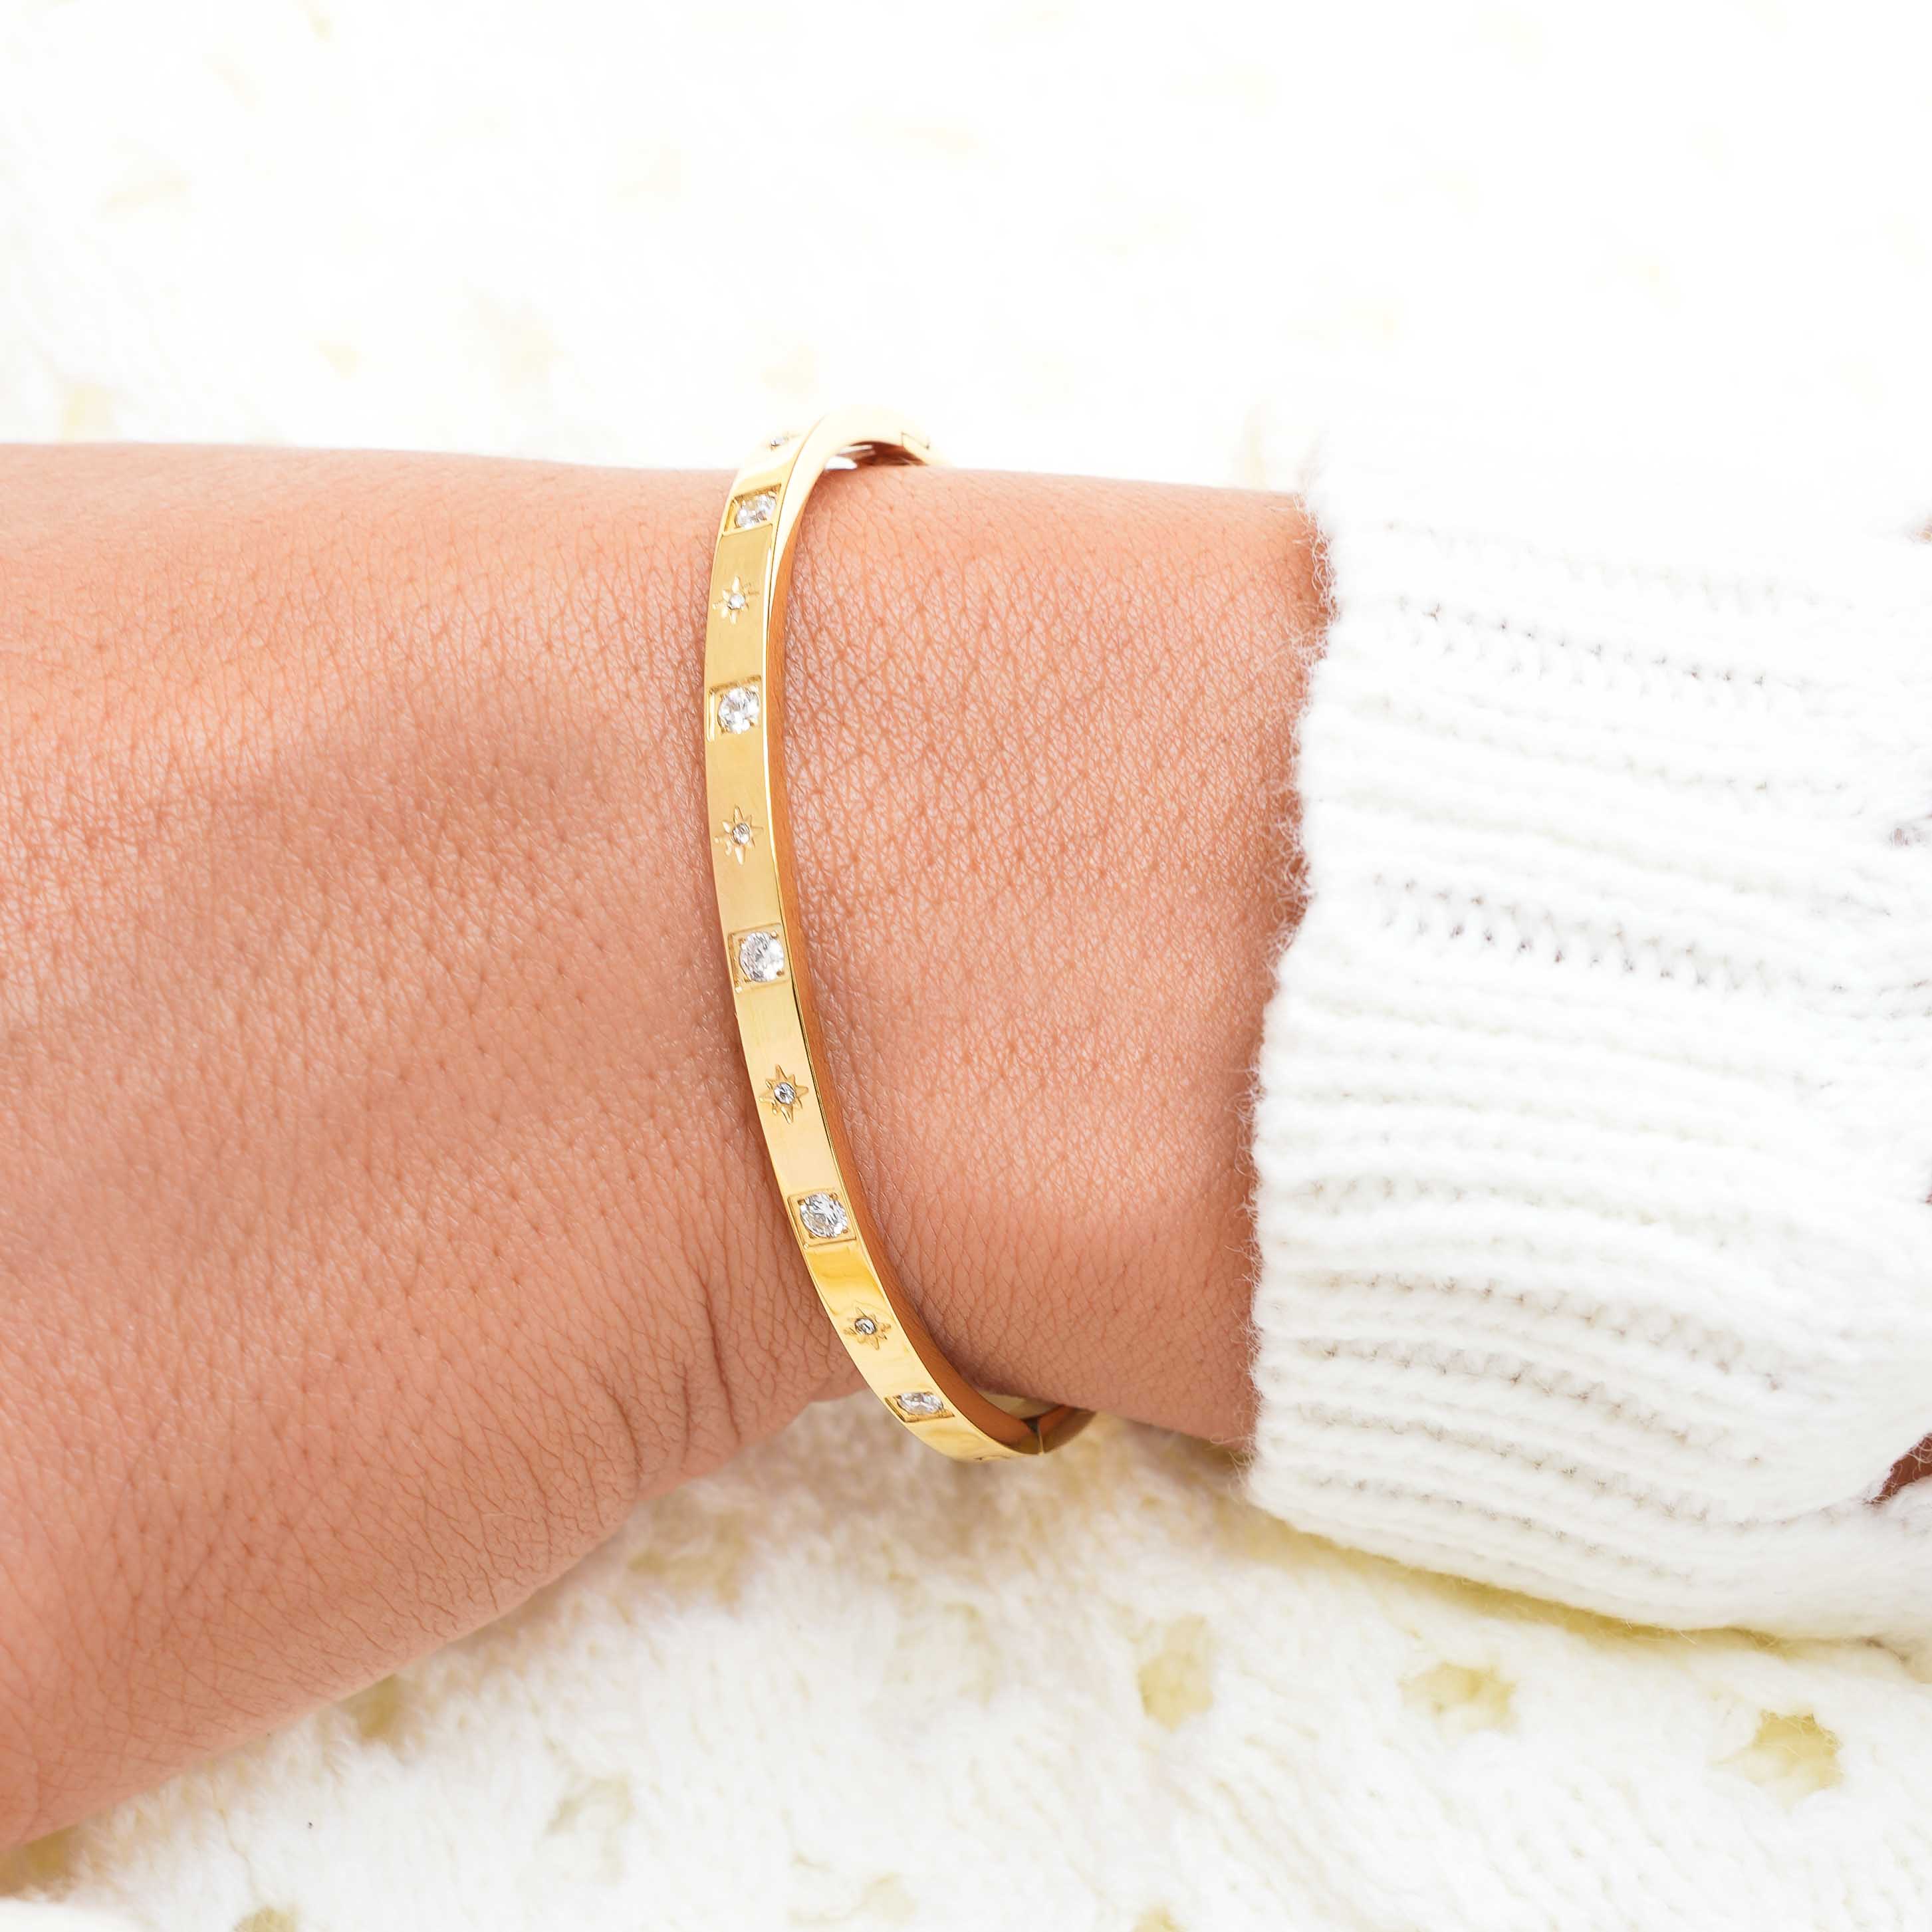 Glimmer - 18k Gold Bangle Zirconia Inset Bracelet